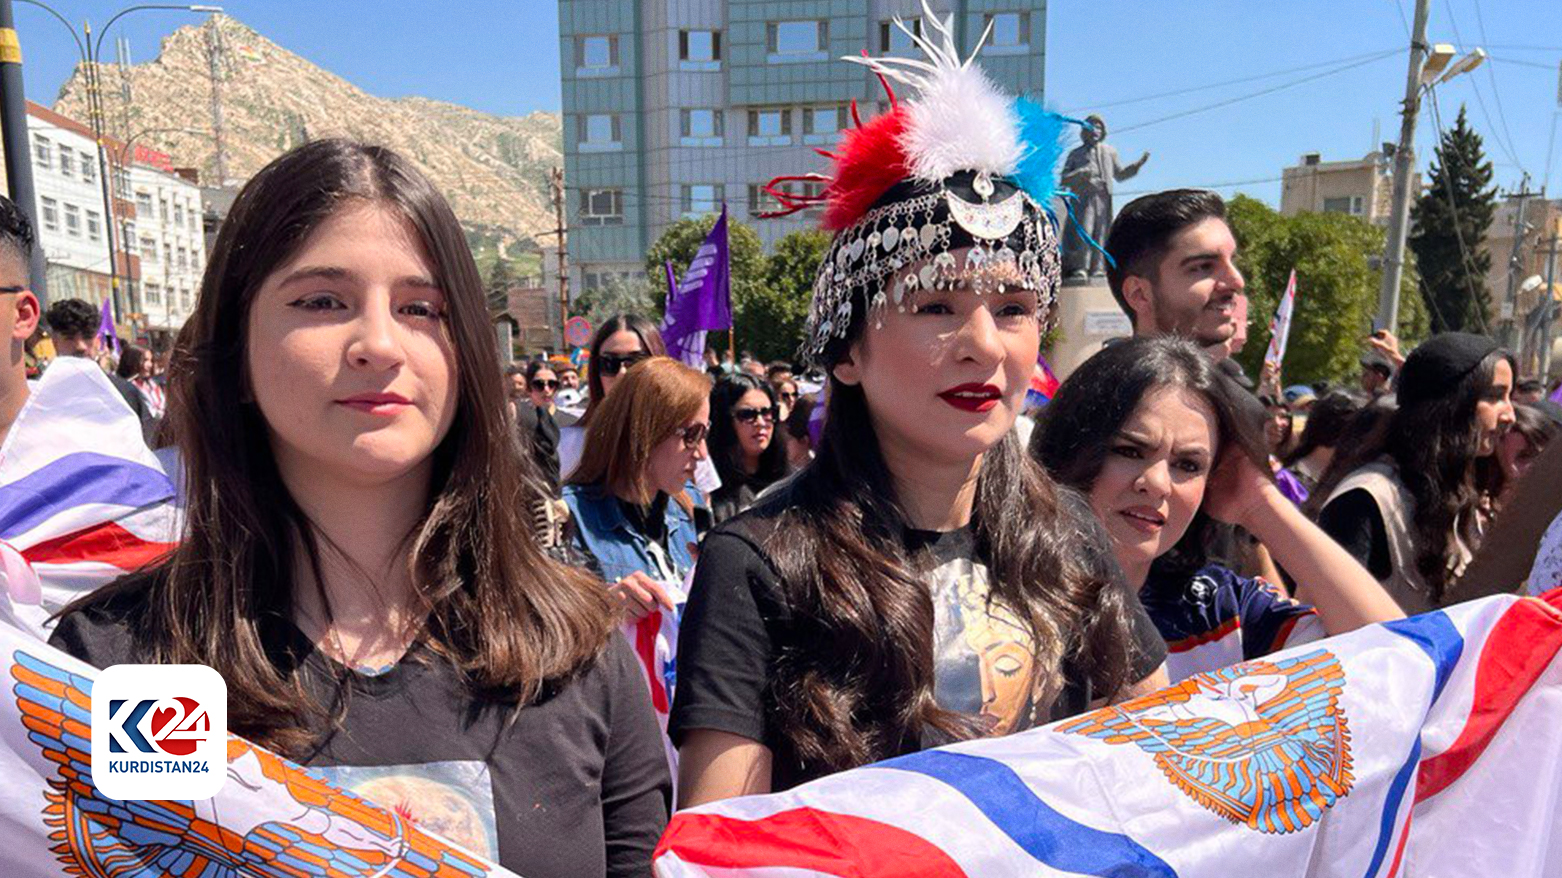 The Assyrian community during the Akitu celebrations. (Photo: Kurdistan 24)